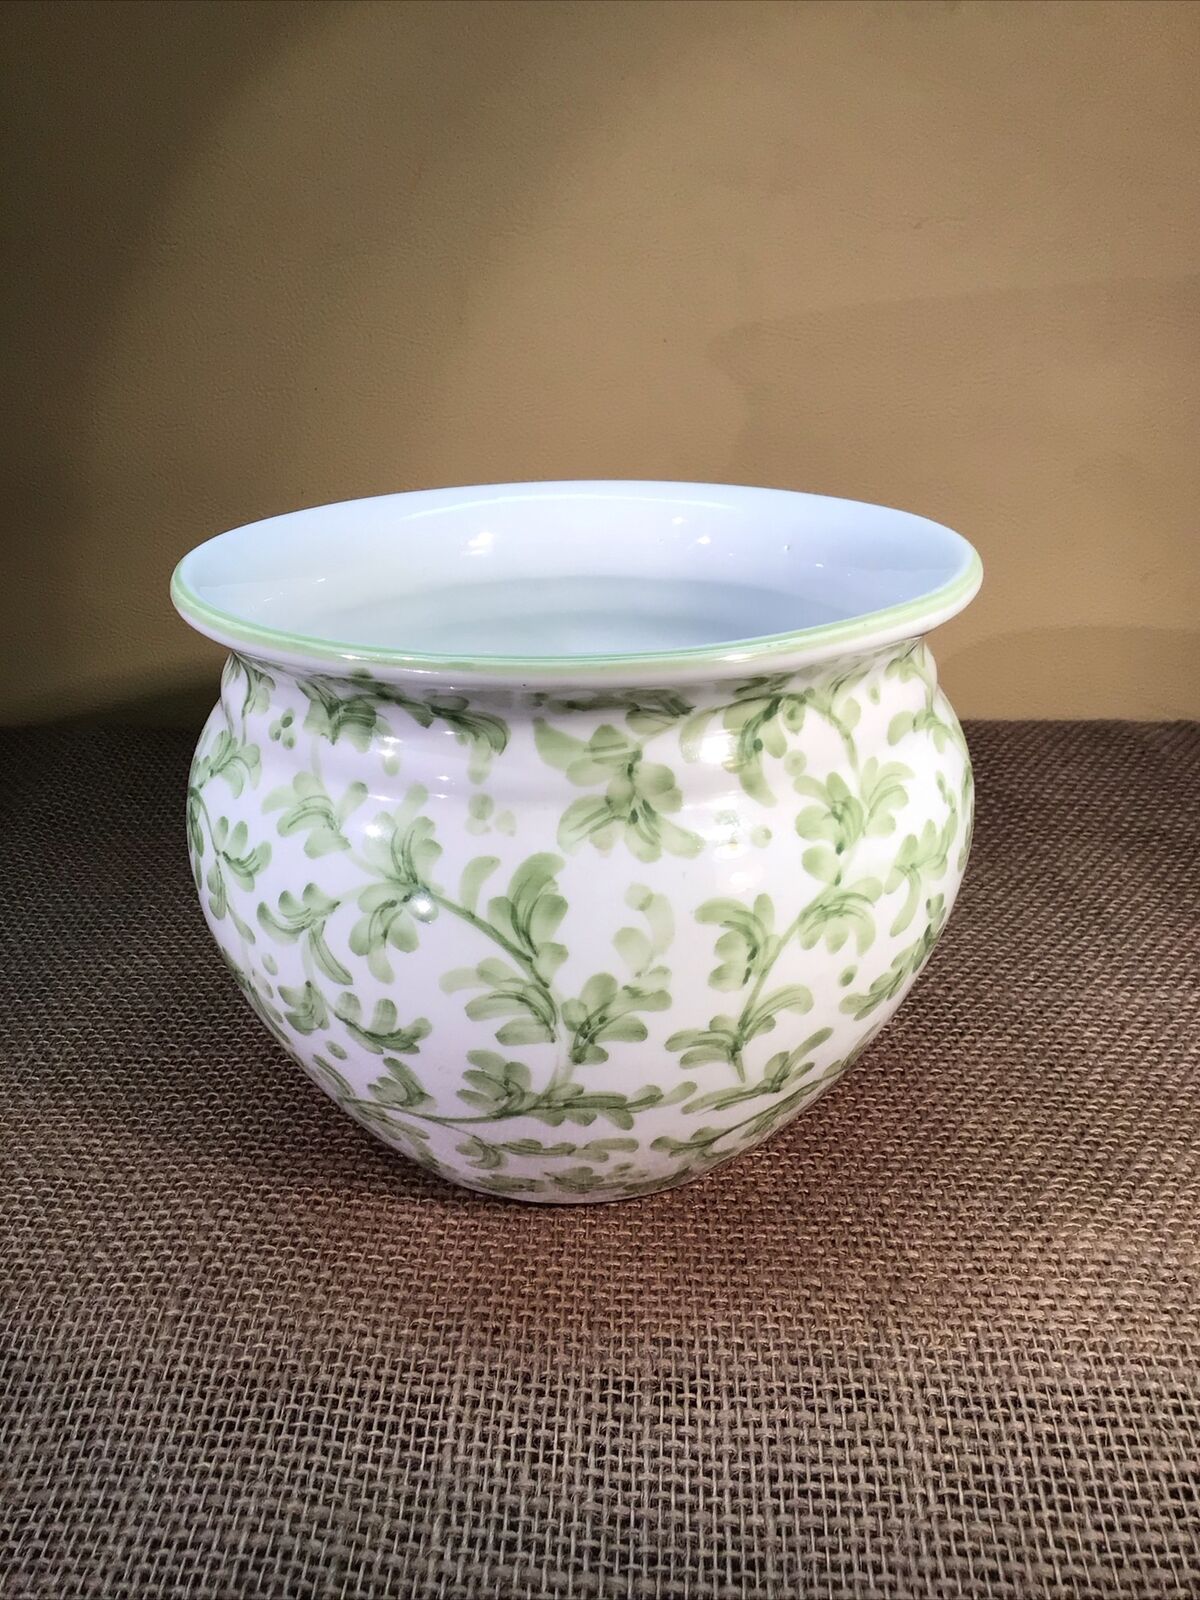 Handpainted Vase White & Green Foliage, Ceramic Porcelain Charles Sadek Import